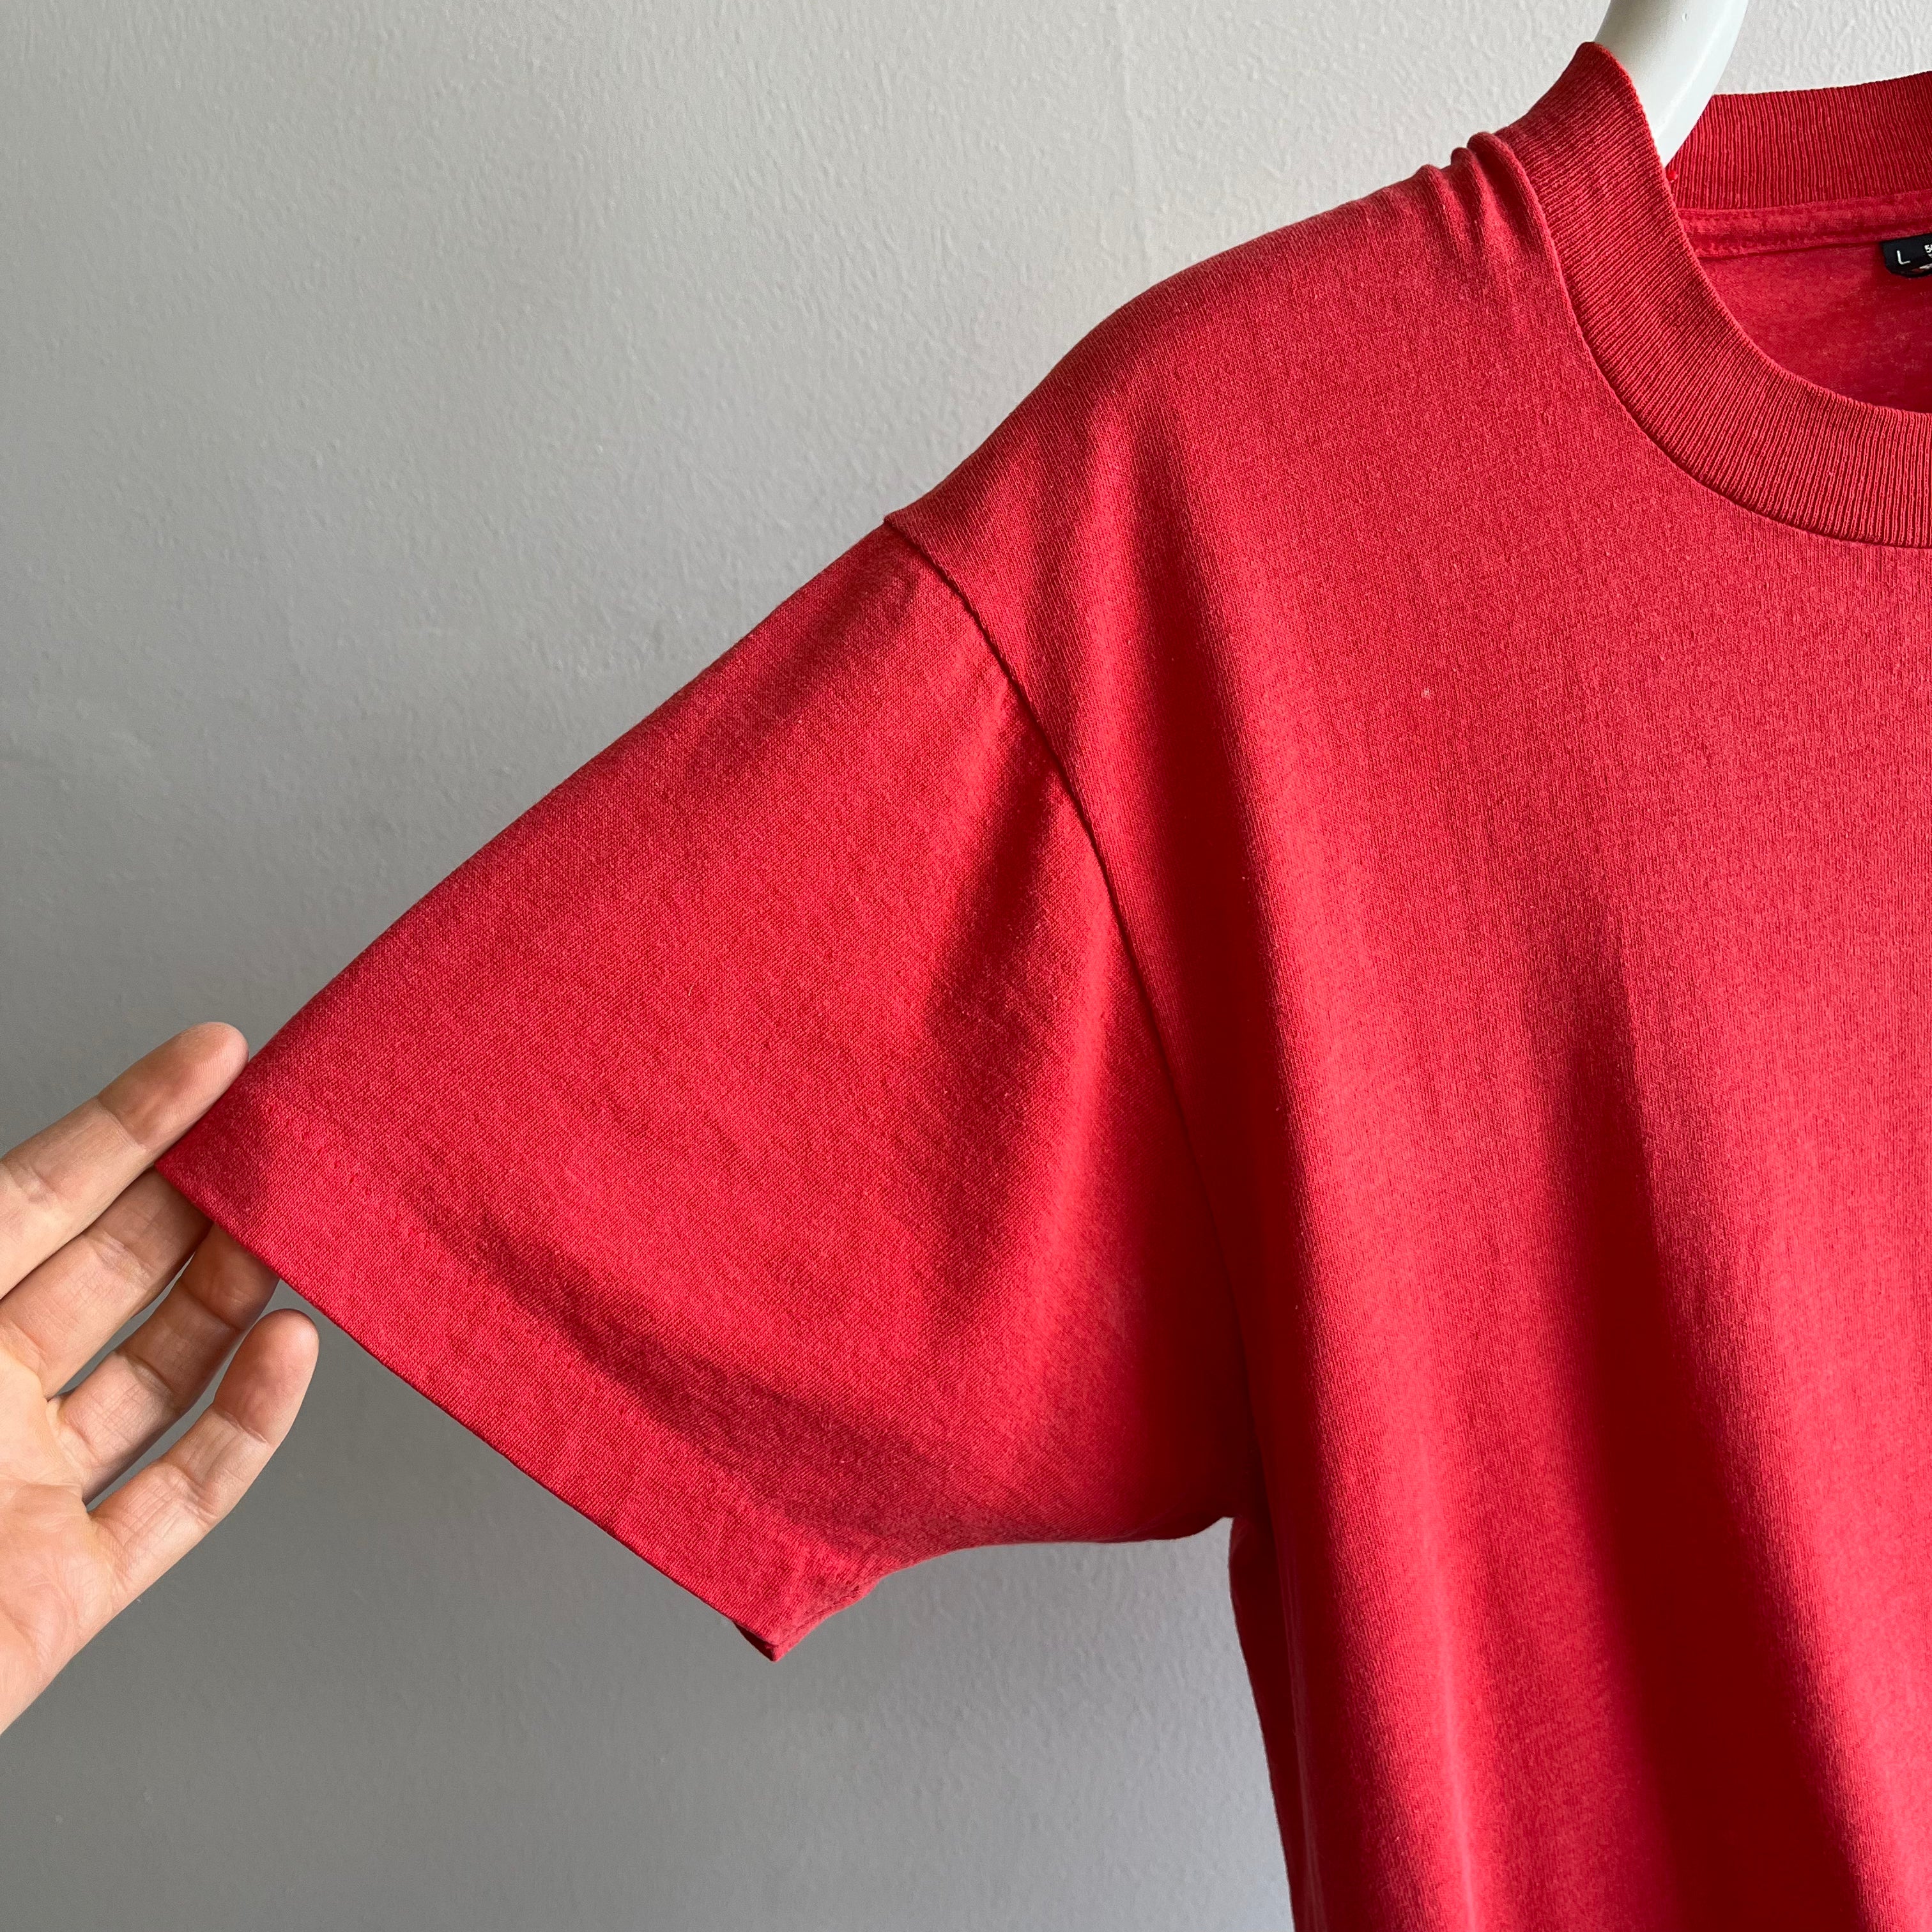 1980s British (?) Gentleman Random Faded Red T-Shirt